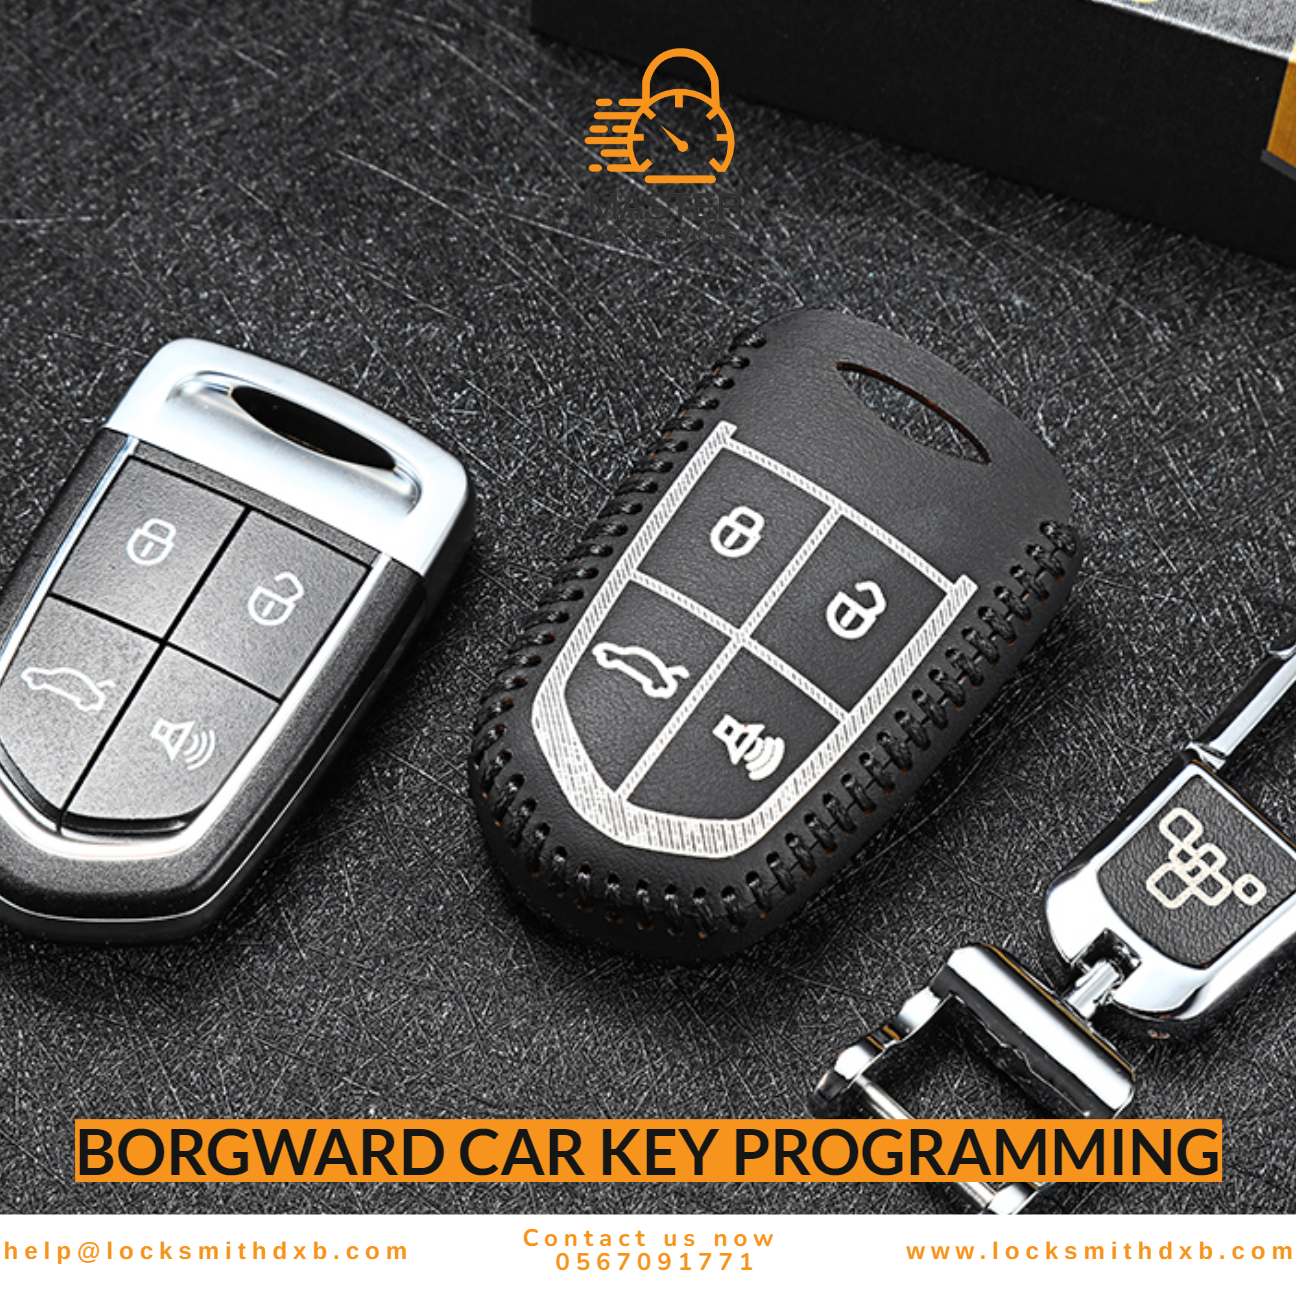 BORGWARD car key programming